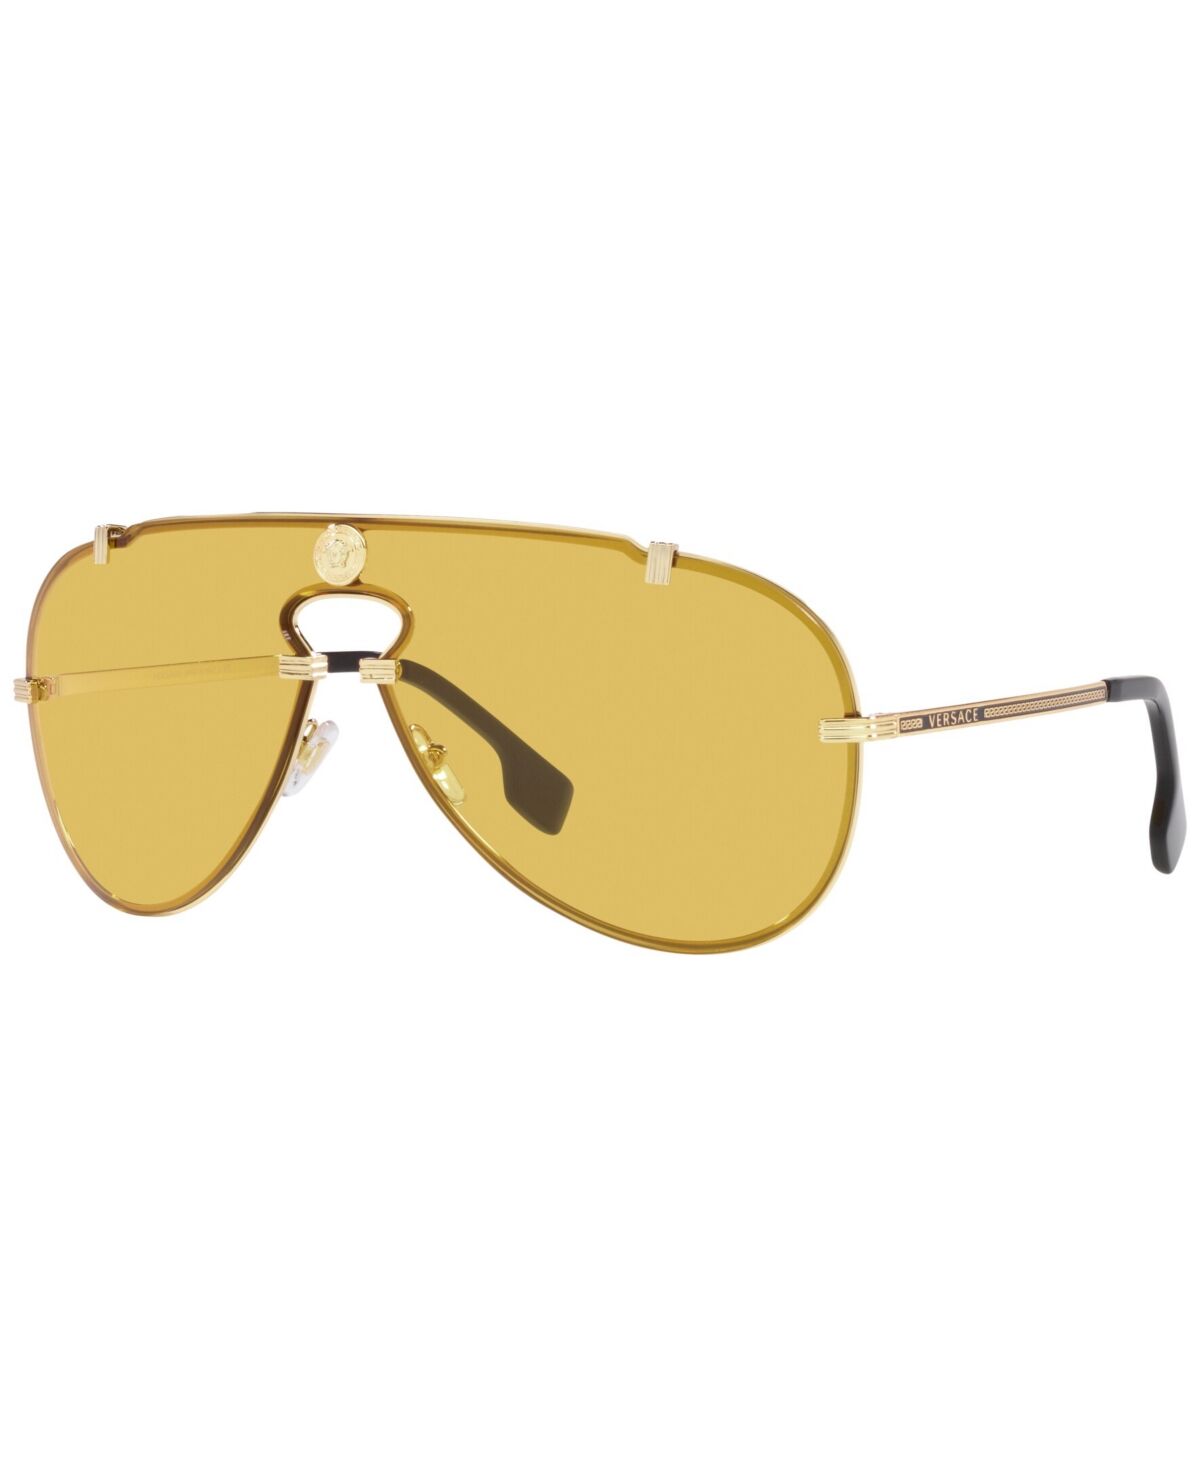 Versace Men's Sunglasses, VE2243 - Gold-Tone